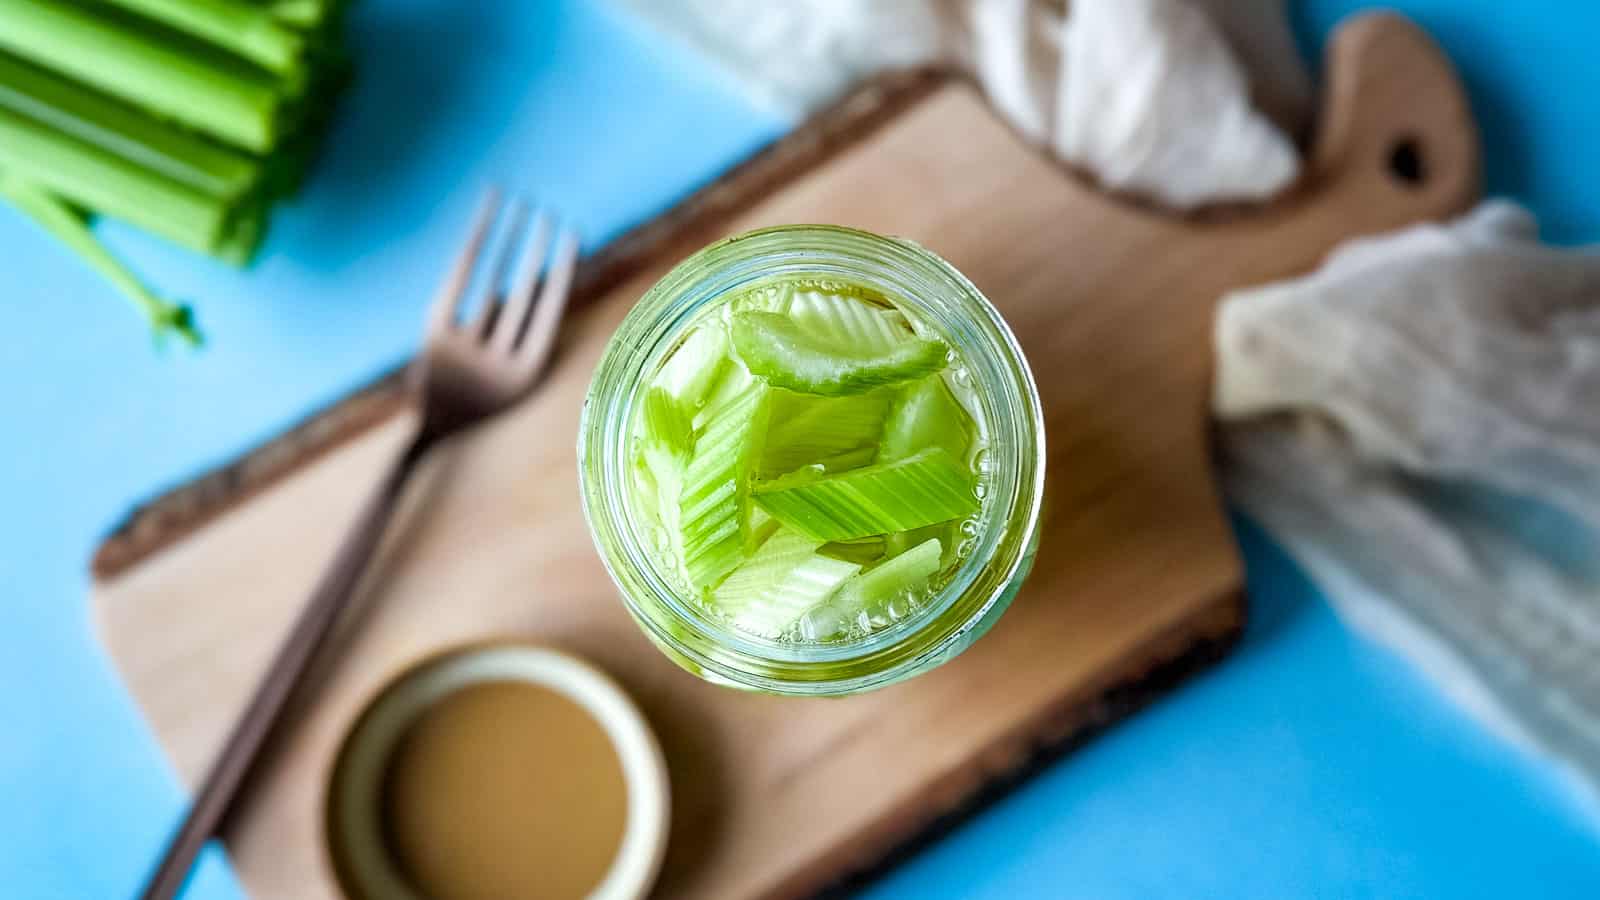 Pickled celery in a glass jar.